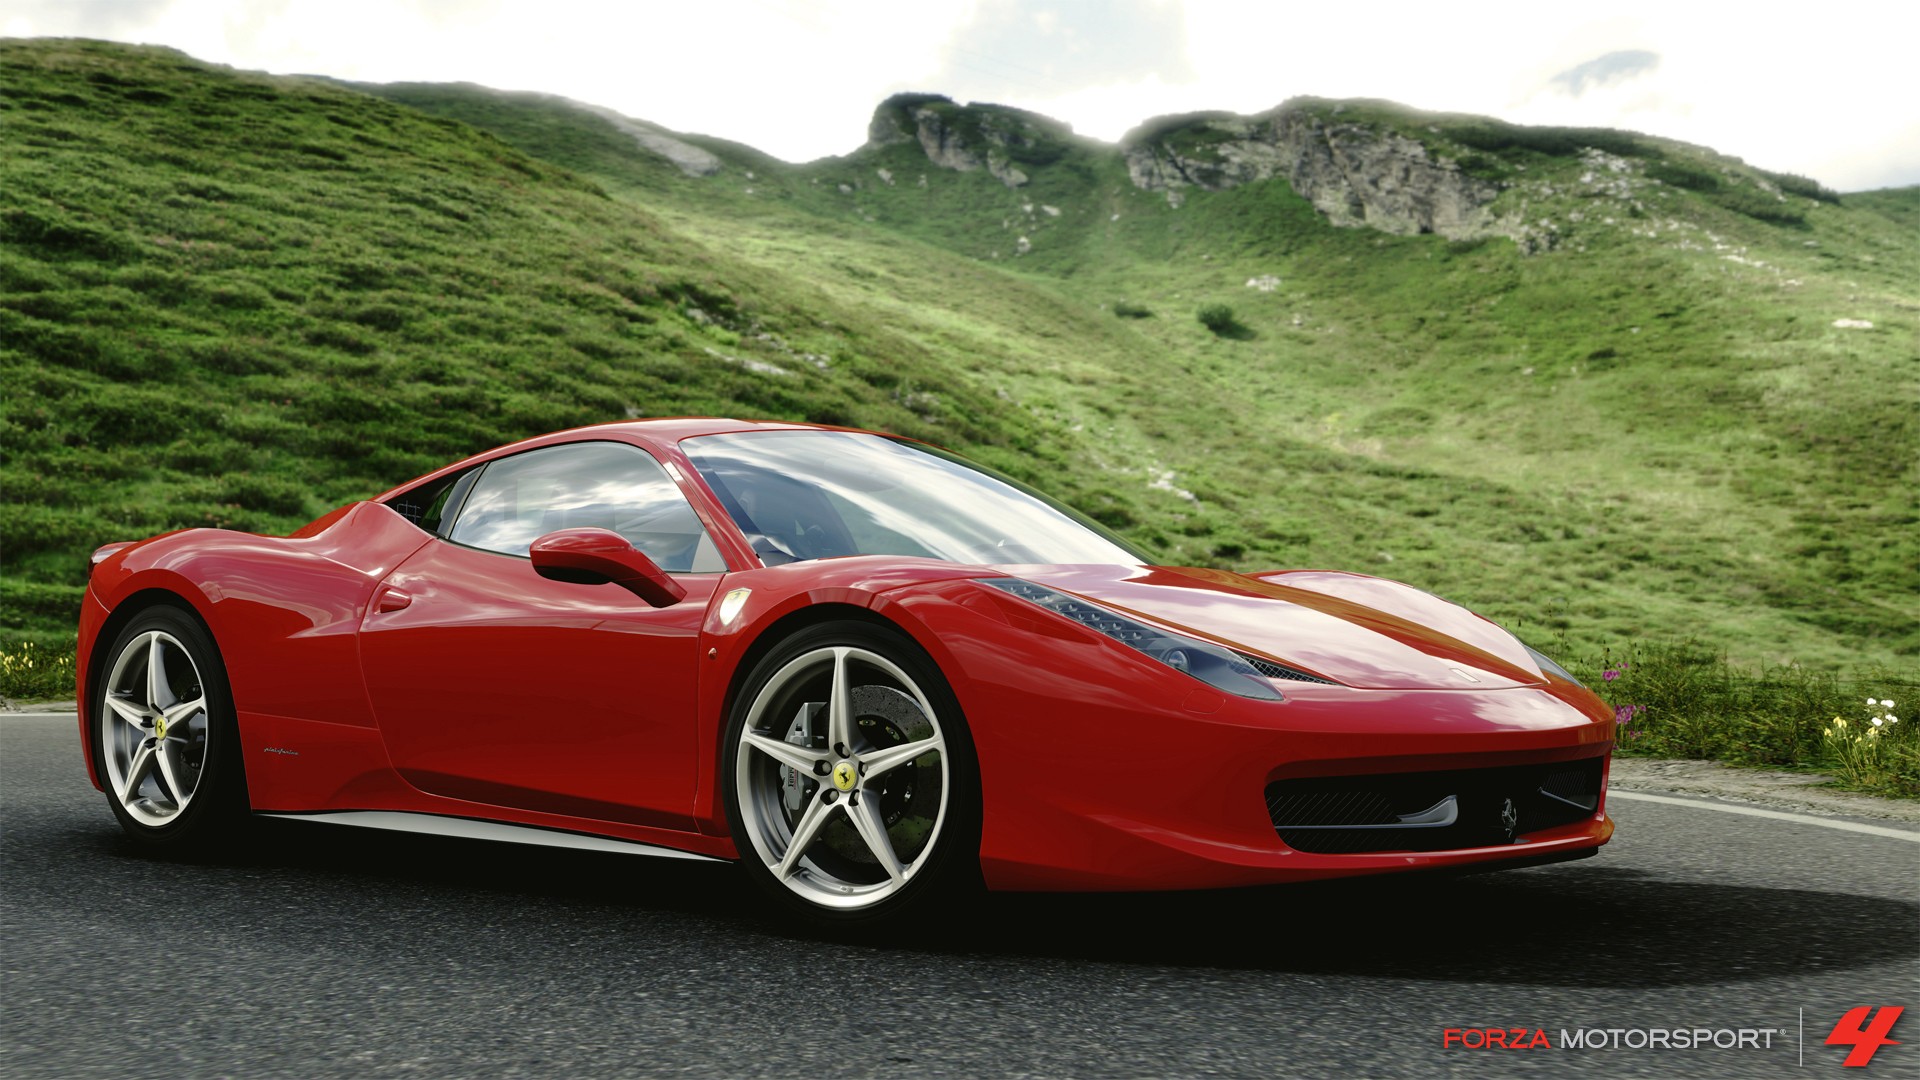 General 1920x1080 Forza Motorsport 4 Ferrari 458 car video games red cars Ferrari vehicle Turn 10 Studios